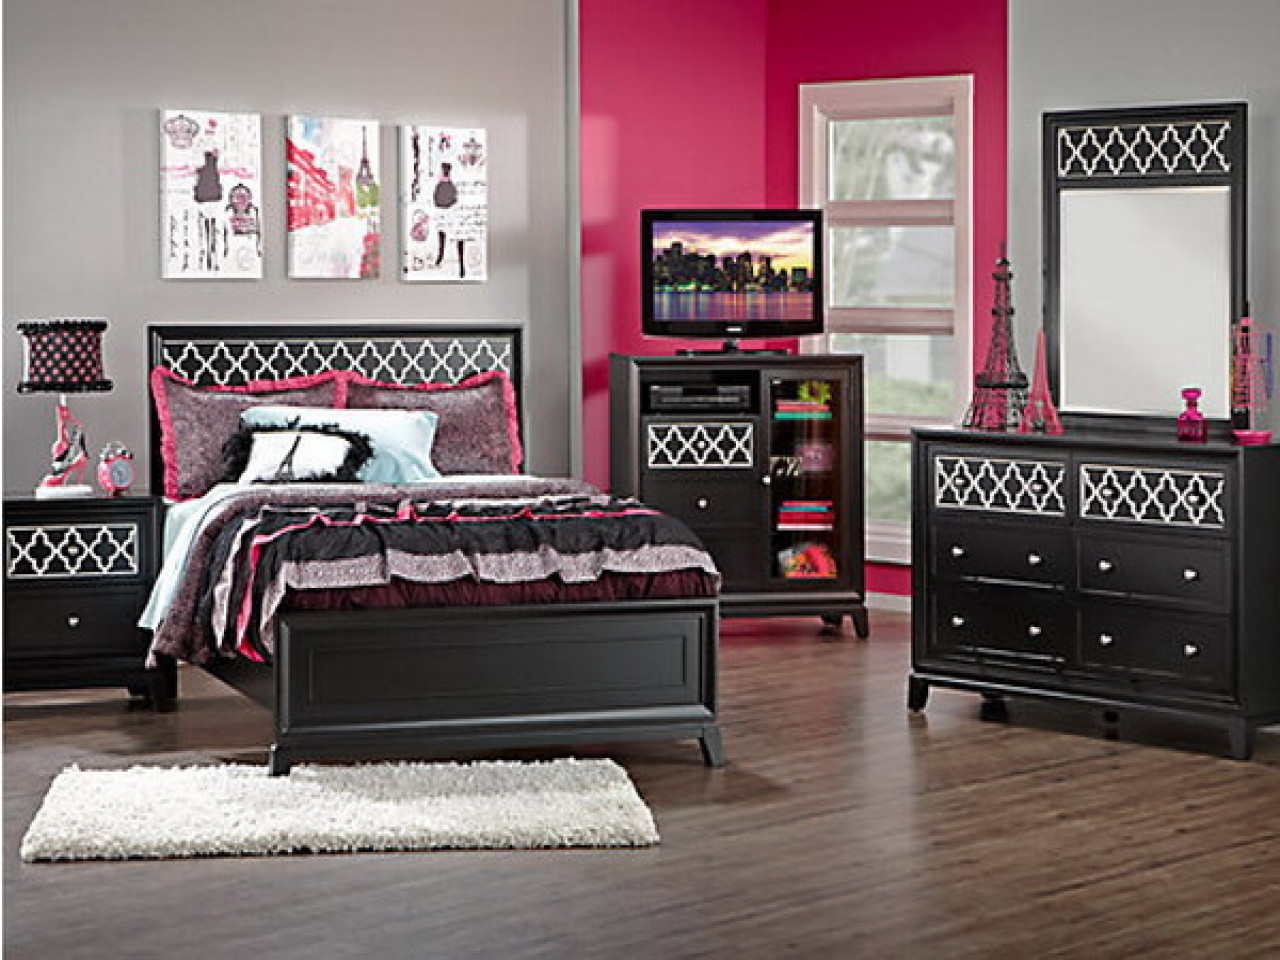 Teenage Girl Bedroom Furniture
 Bedroom furniture for a teenage girl